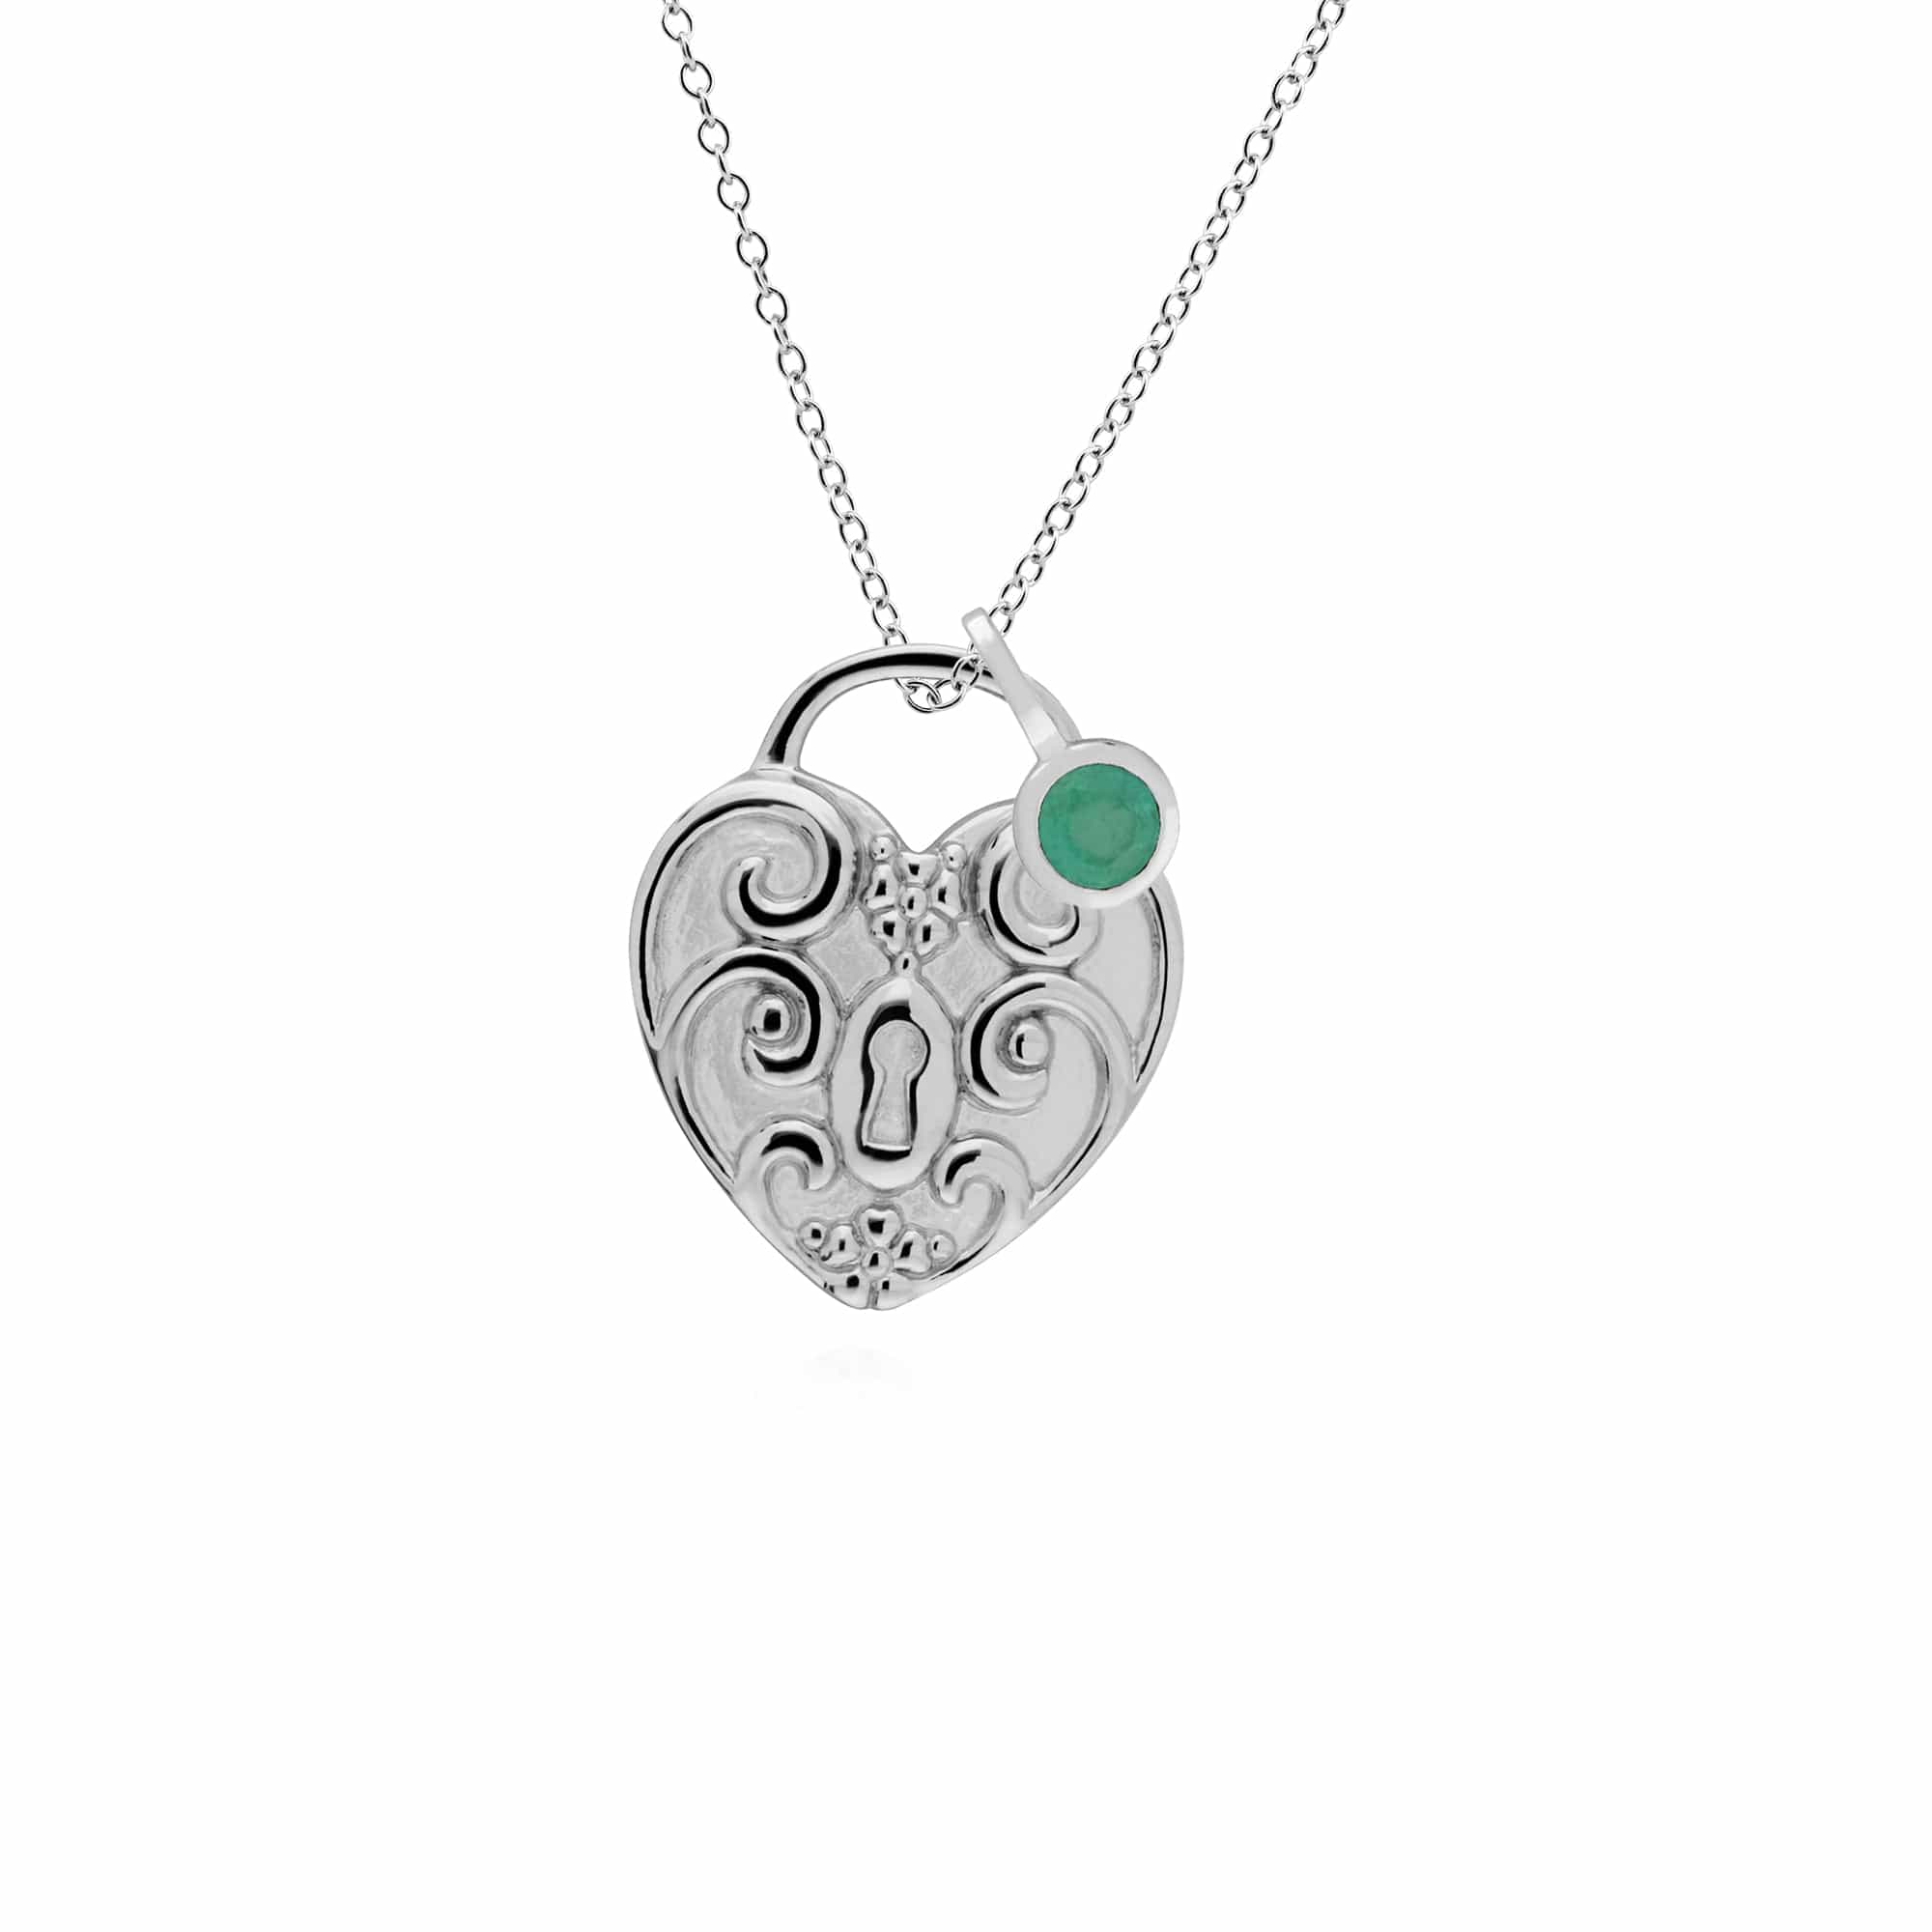 270P027602925-270P026601925 Classic Swirl Heart Lock Pendant & Emerald Charm in 925 Sterling Silver 1